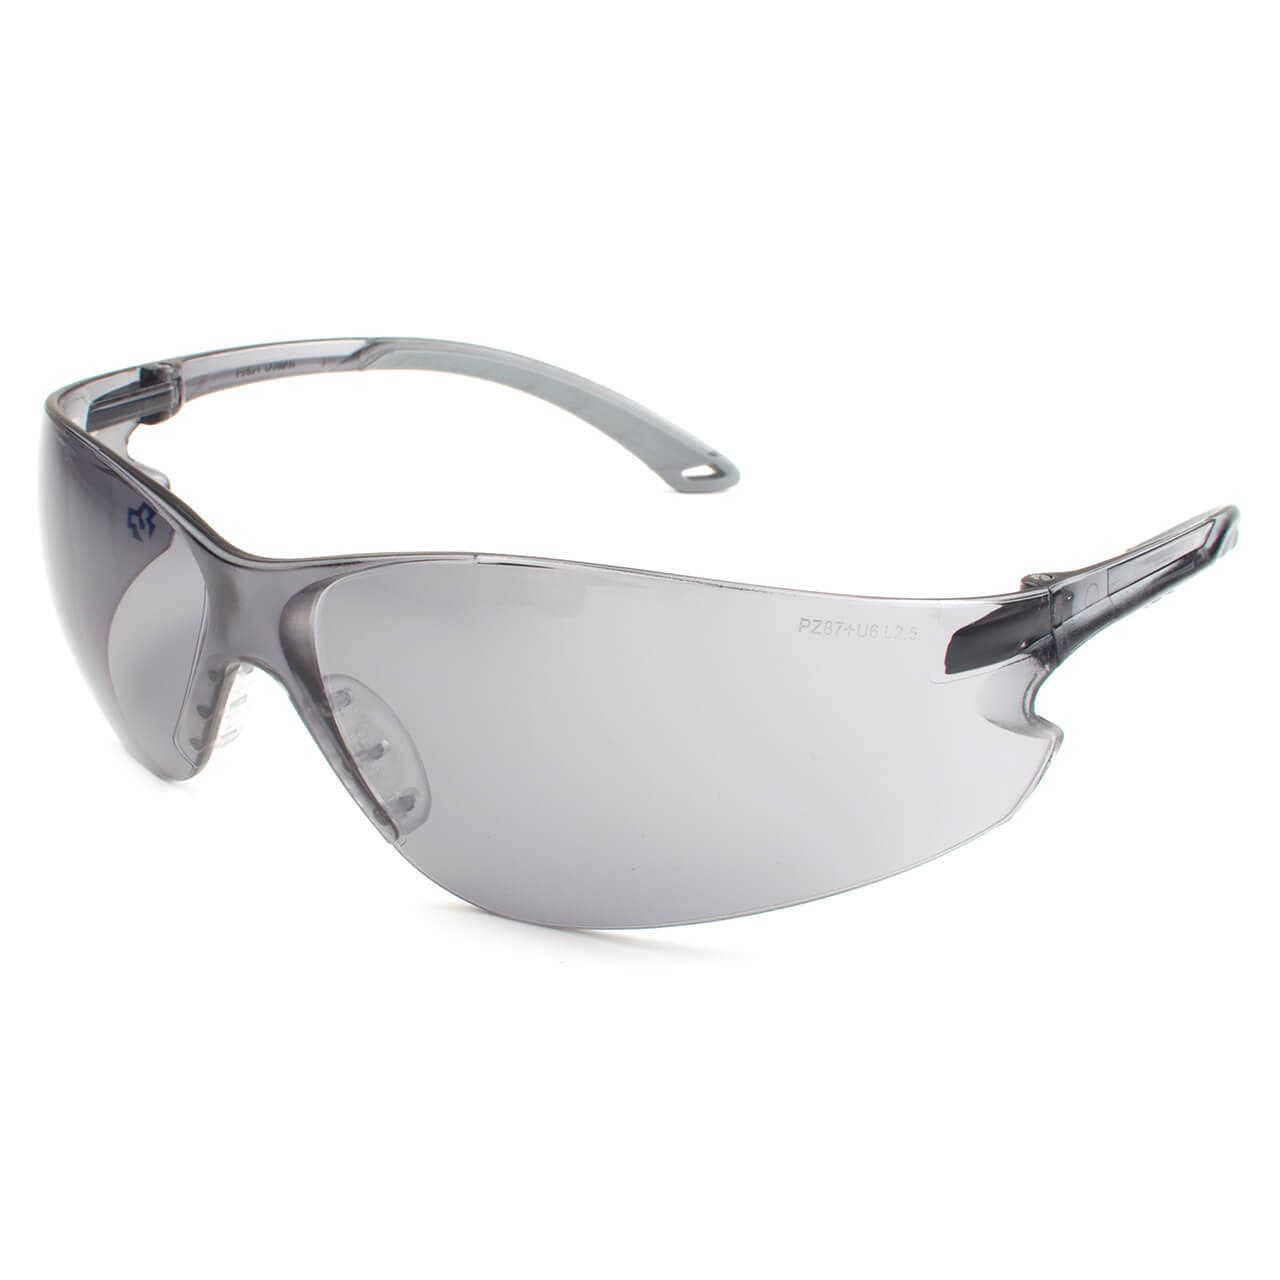 Metel M20 Safety Glasses with Gray Anti-Fog Lenses